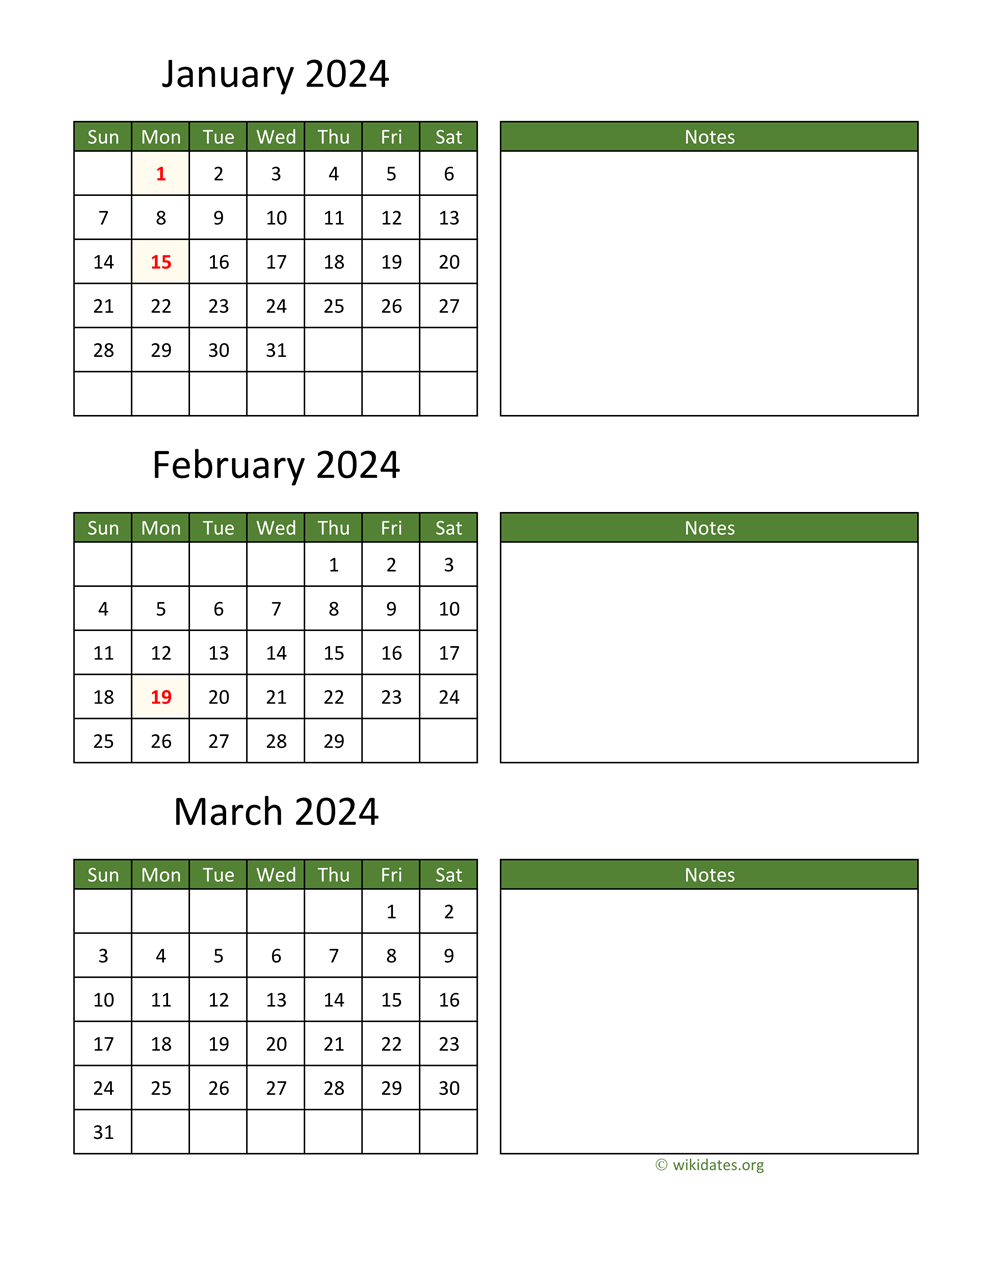 Calendar Spread 2024 Cool Top Most Popular Incredible | Lunar Events